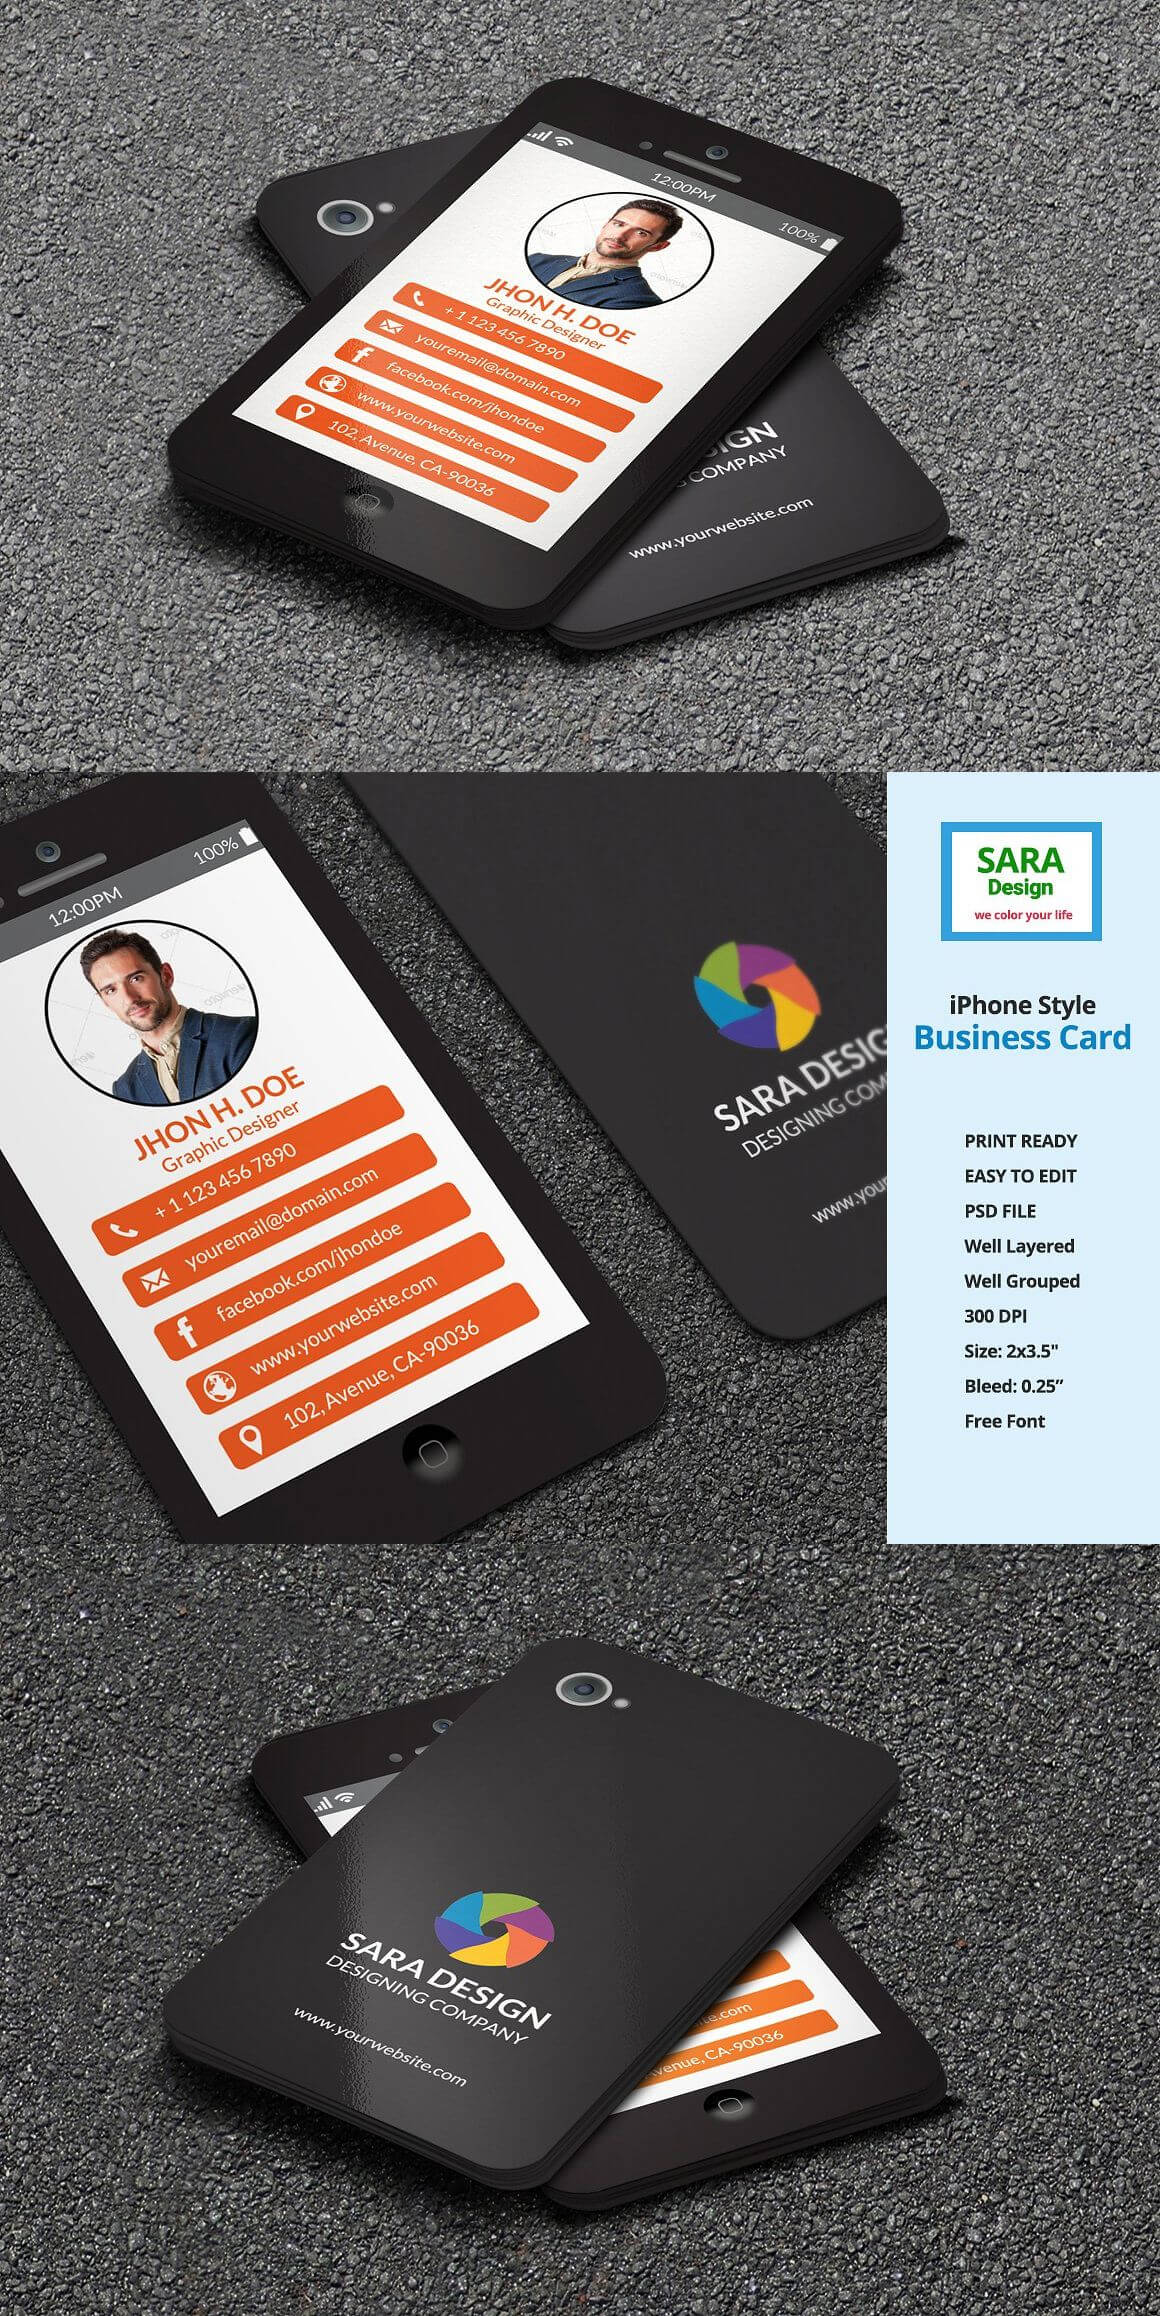 Iphone Stylish Business Card Templates Psd | Business Card For Iphone Business Card Template